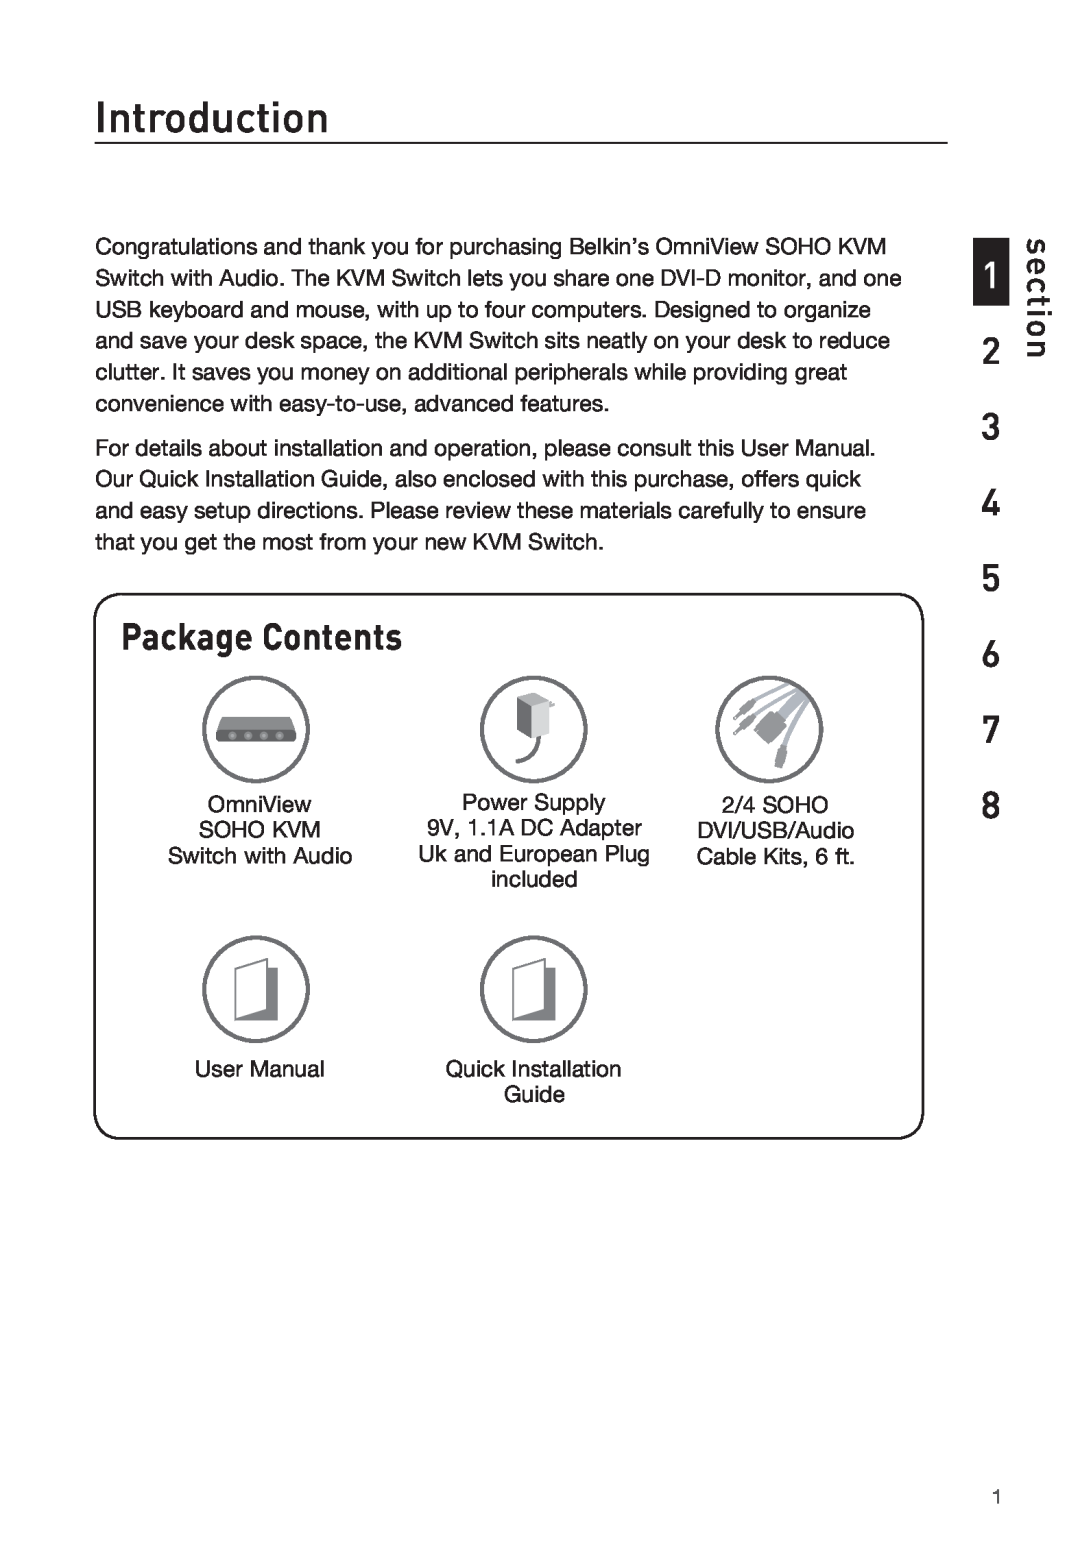 Belkin F1DD102LEA, F1DD104LEA manual Introduction, Package Contents, section 